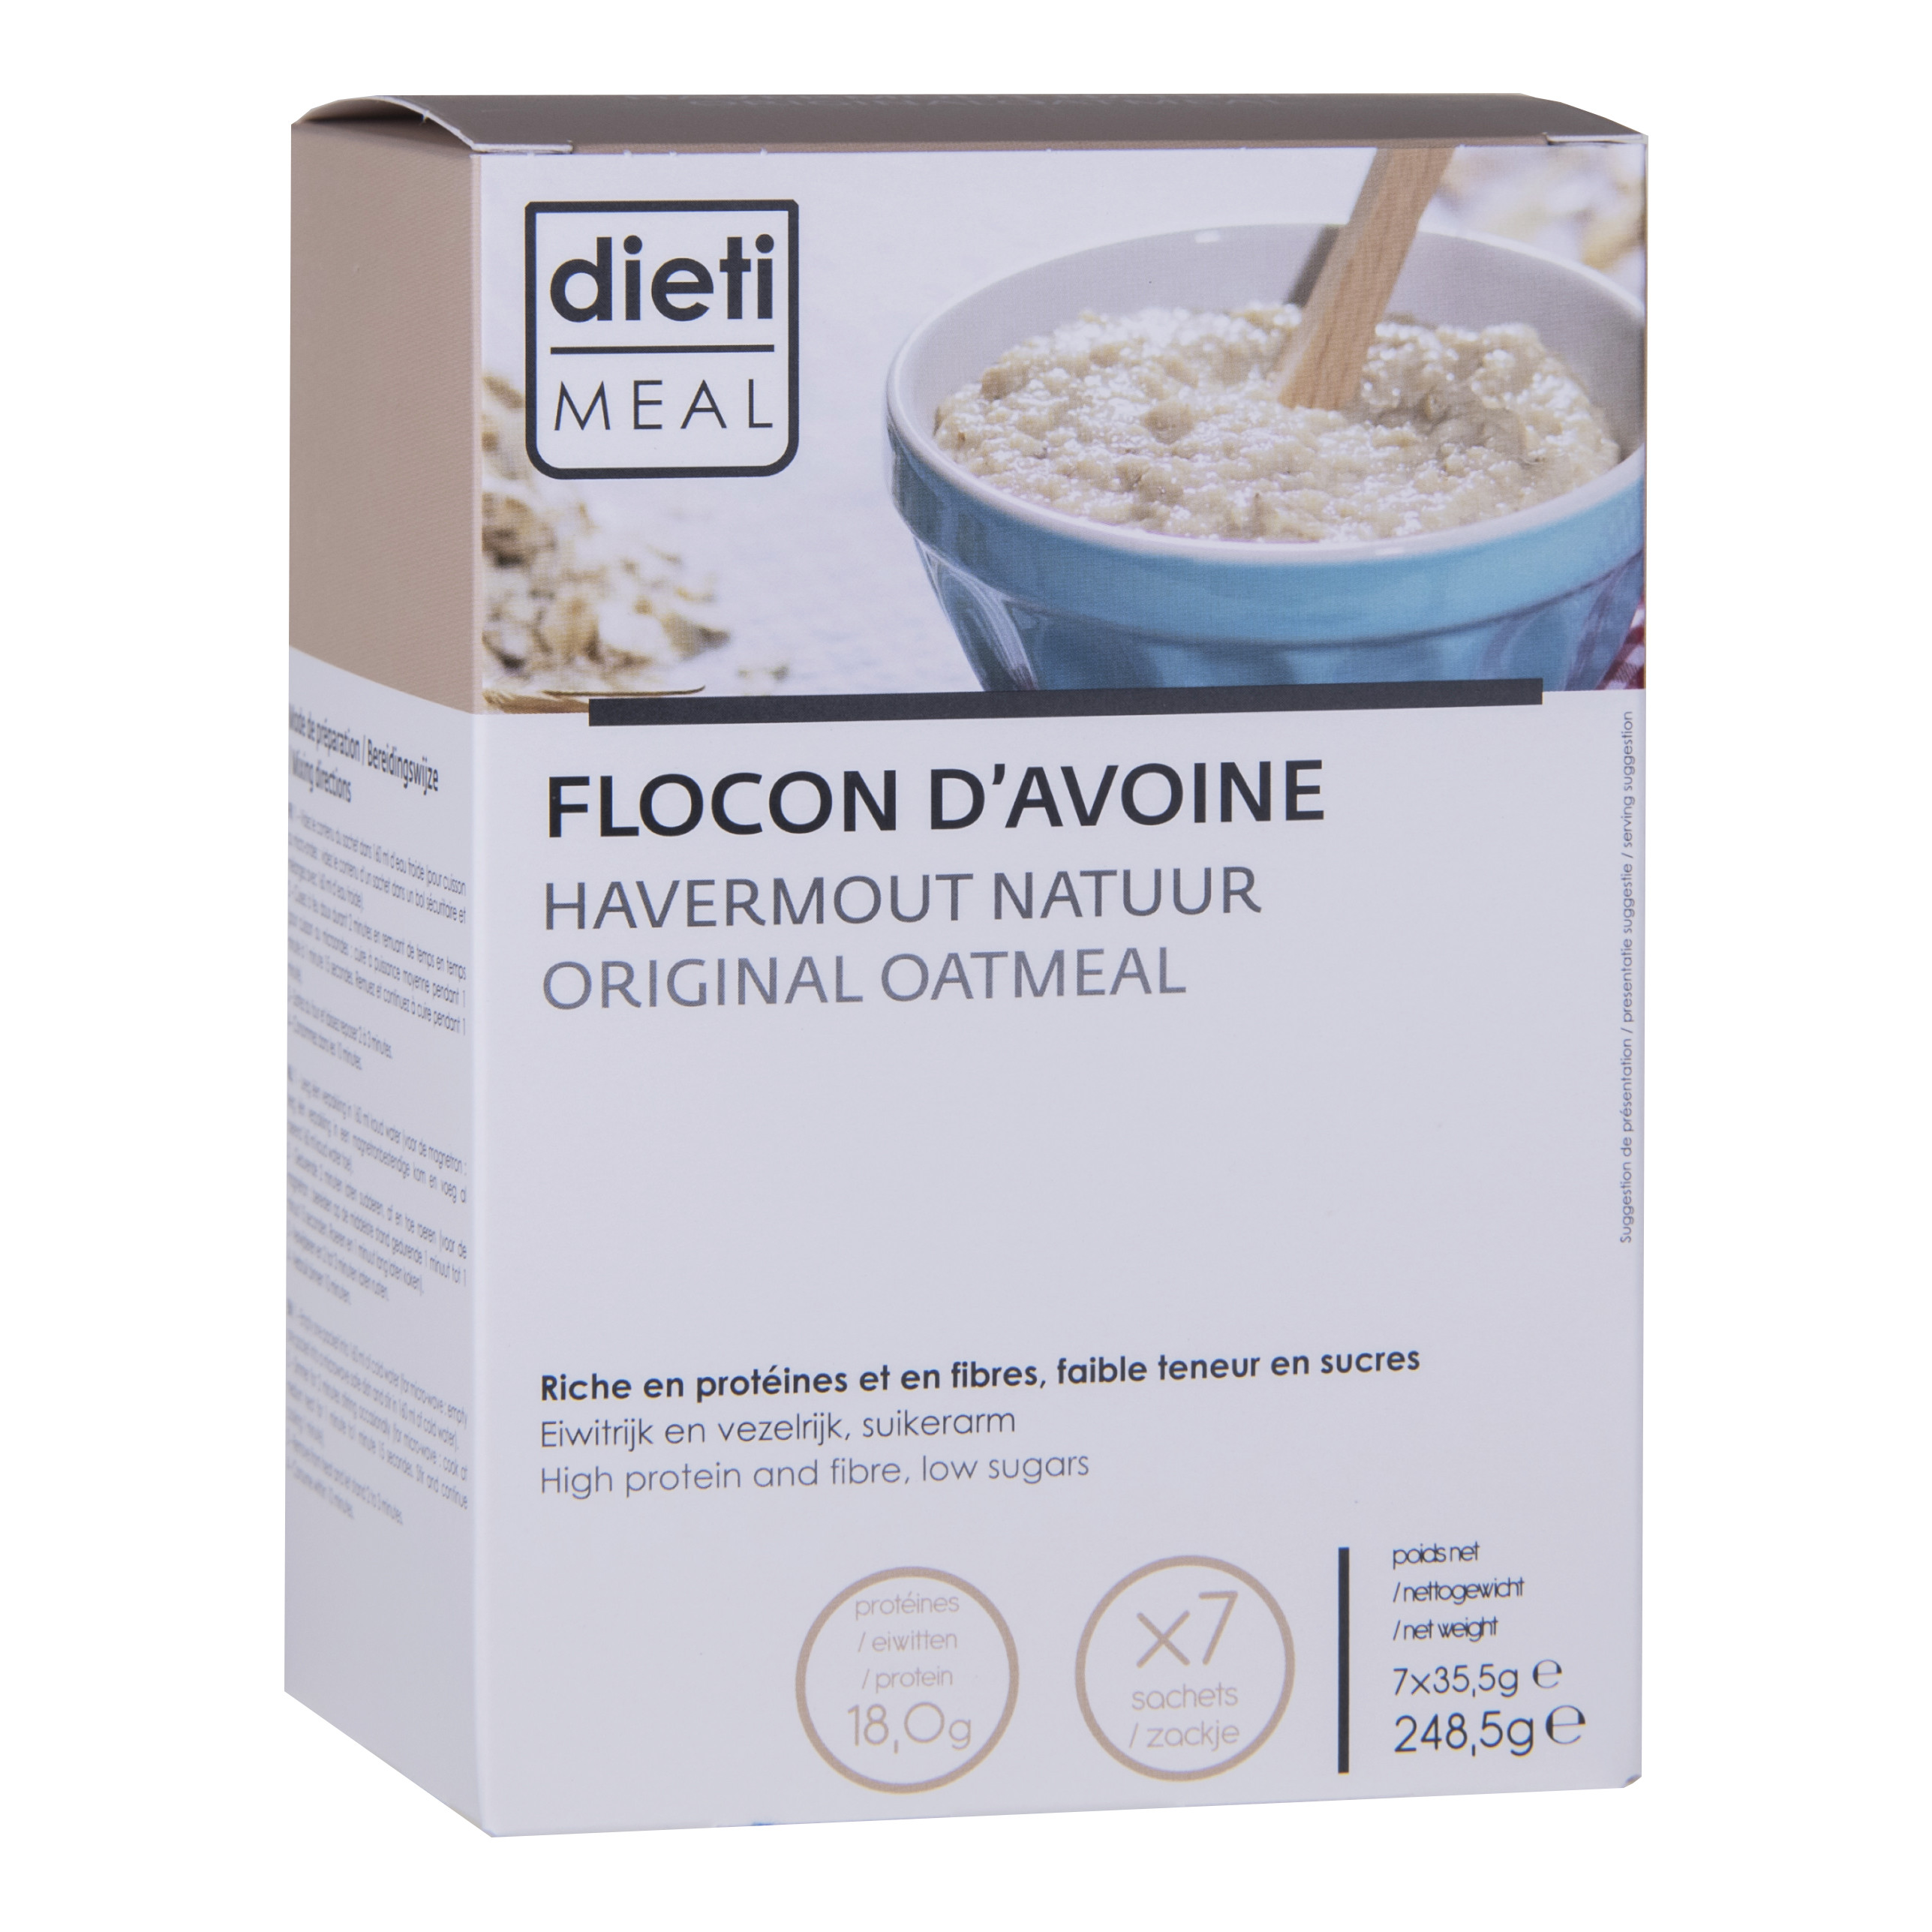 Dietimeal Porridge proteico istantaneo Low Carb 120kcal fonte di fibre